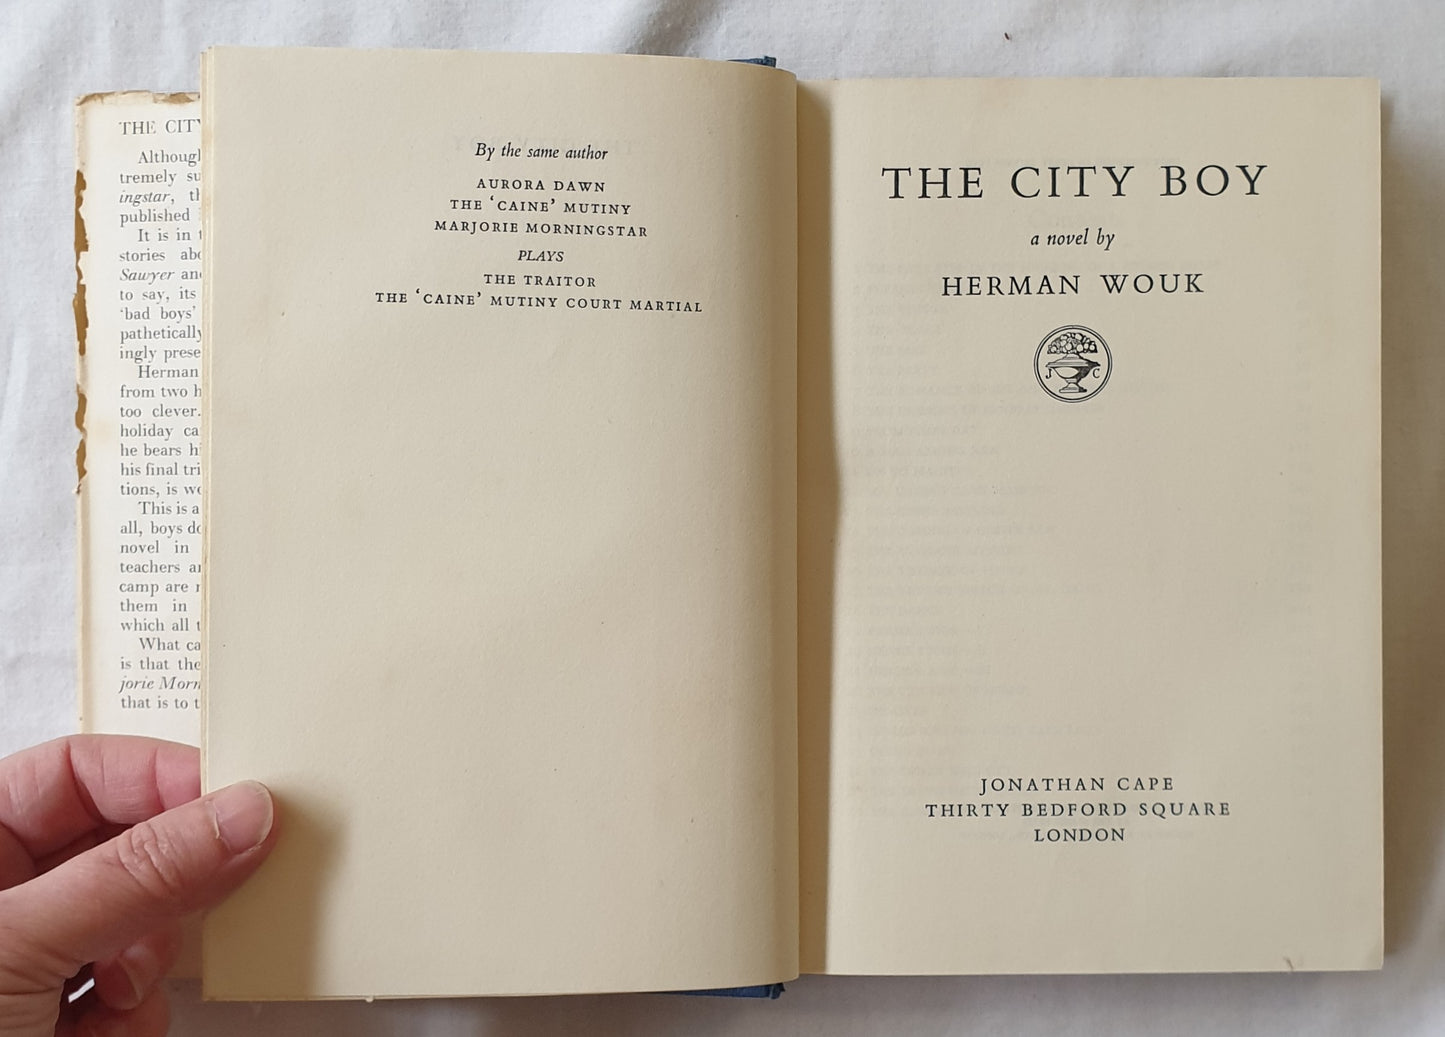 The City Boy by Herman Wouk